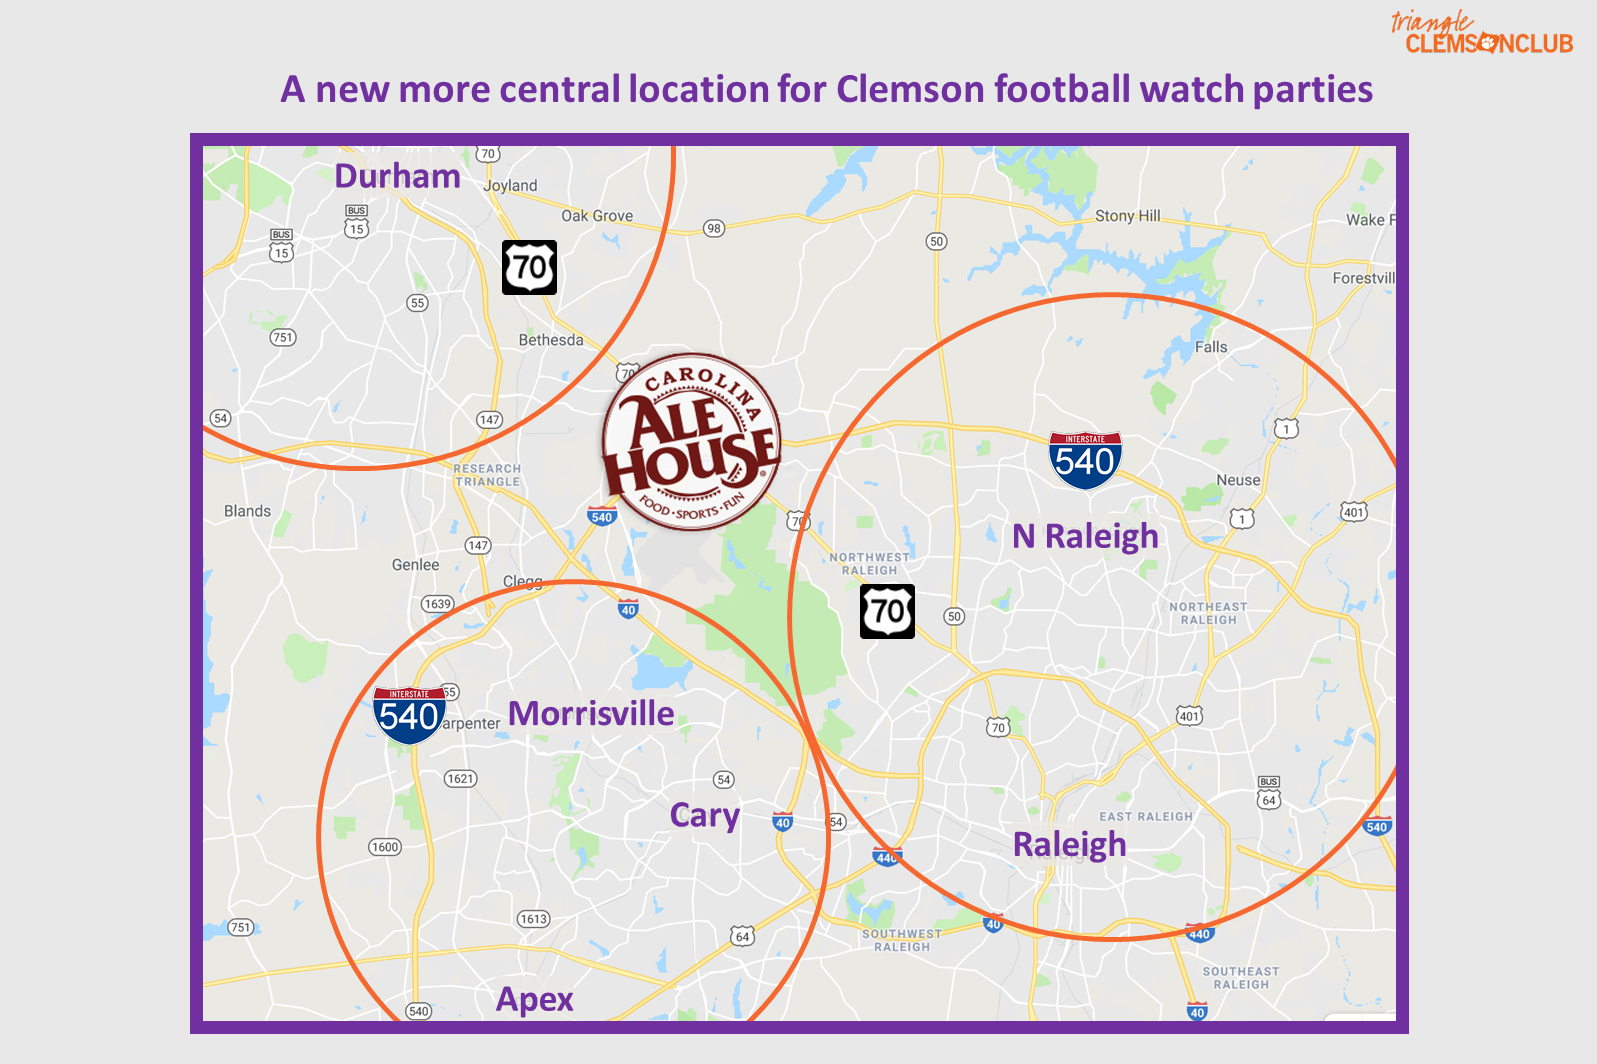 Triangle Clemson Club 2019-2020 Football Watch Parties